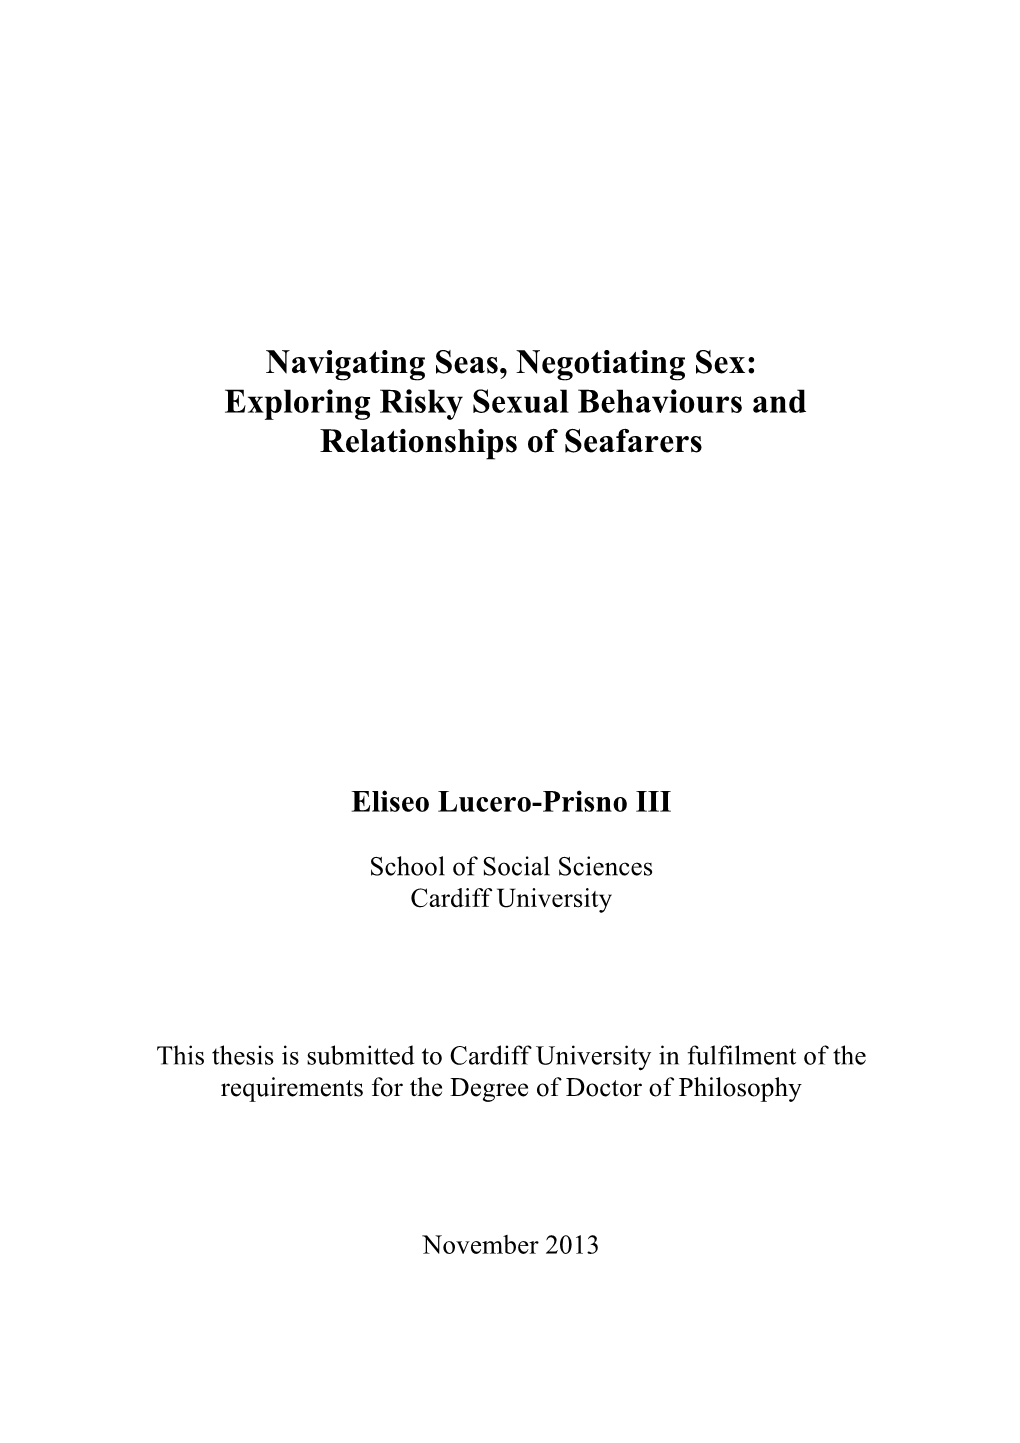 Navigating Seas, Negotiating Sex: Exploring Risky Sexual Behaviours and Relationships of Seafarers